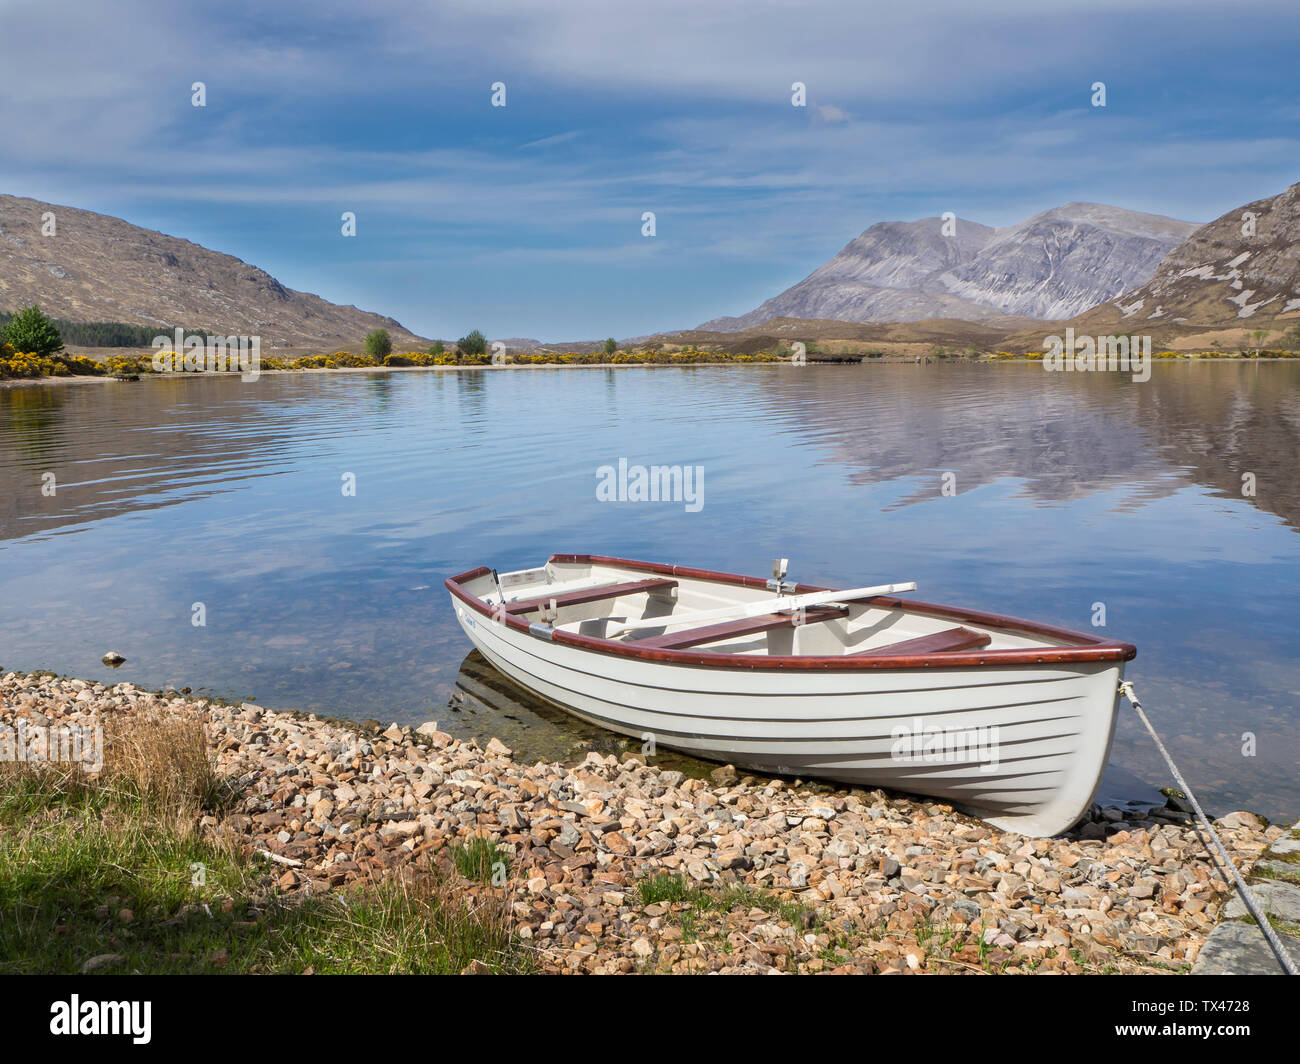 Great Britain, Scotland, Northwest Highlands, Achfary, mountain landscape with lake and boat Stock Photo